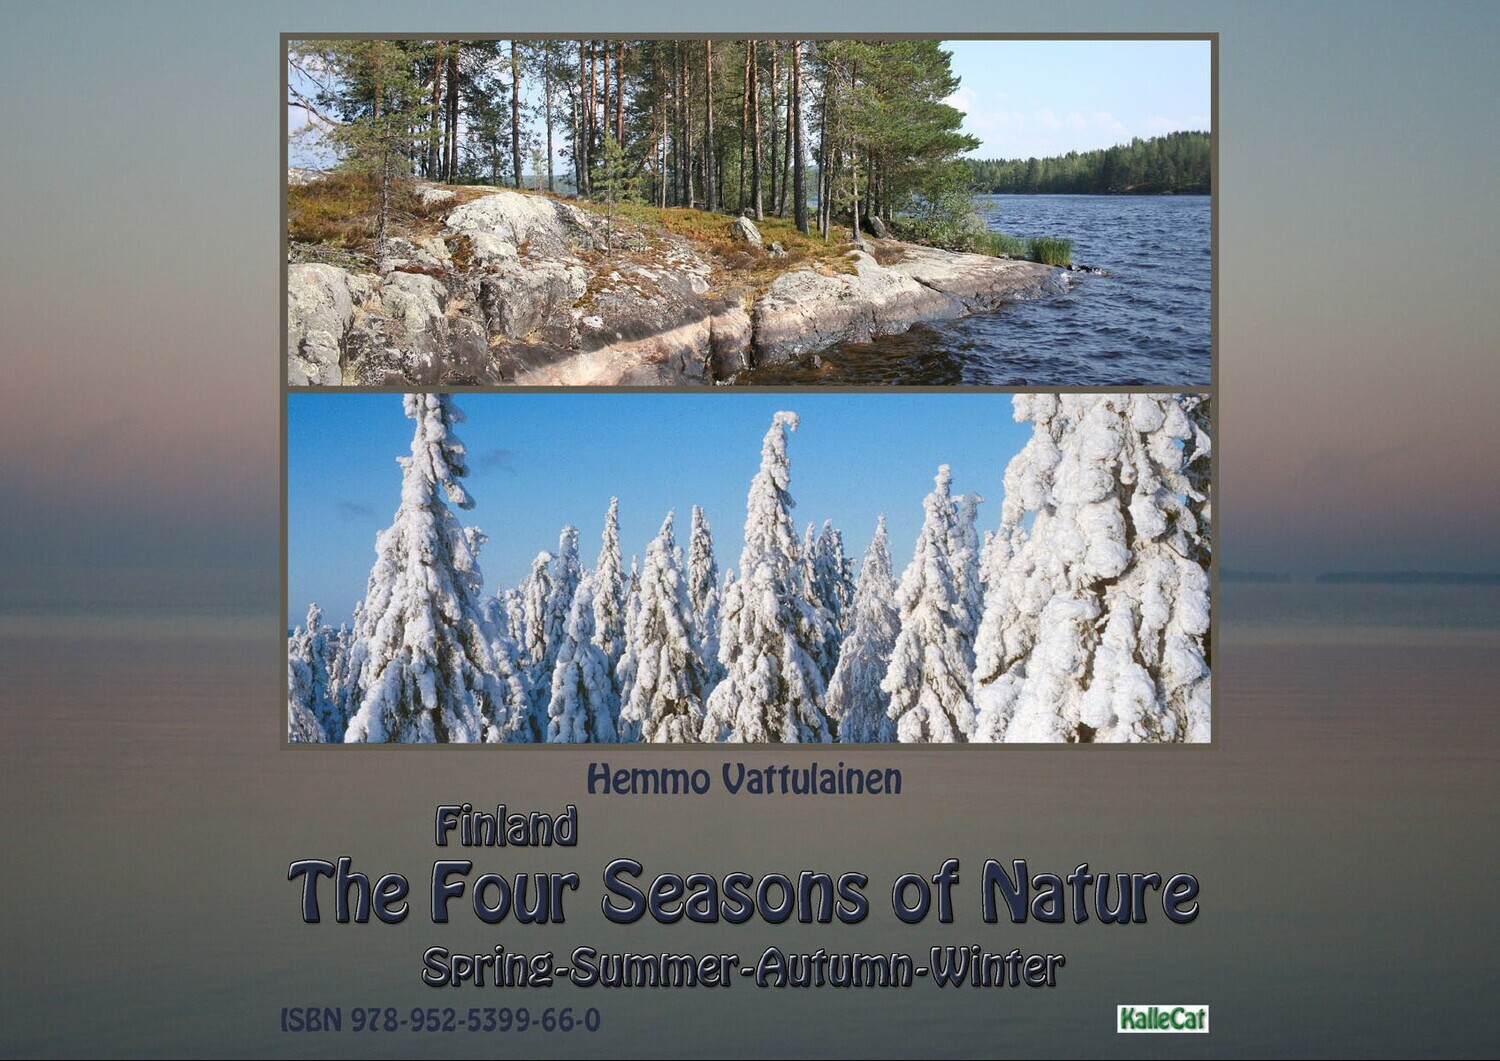 Finland - The Four Seasons of Nature - e Photo Book - pdf . English